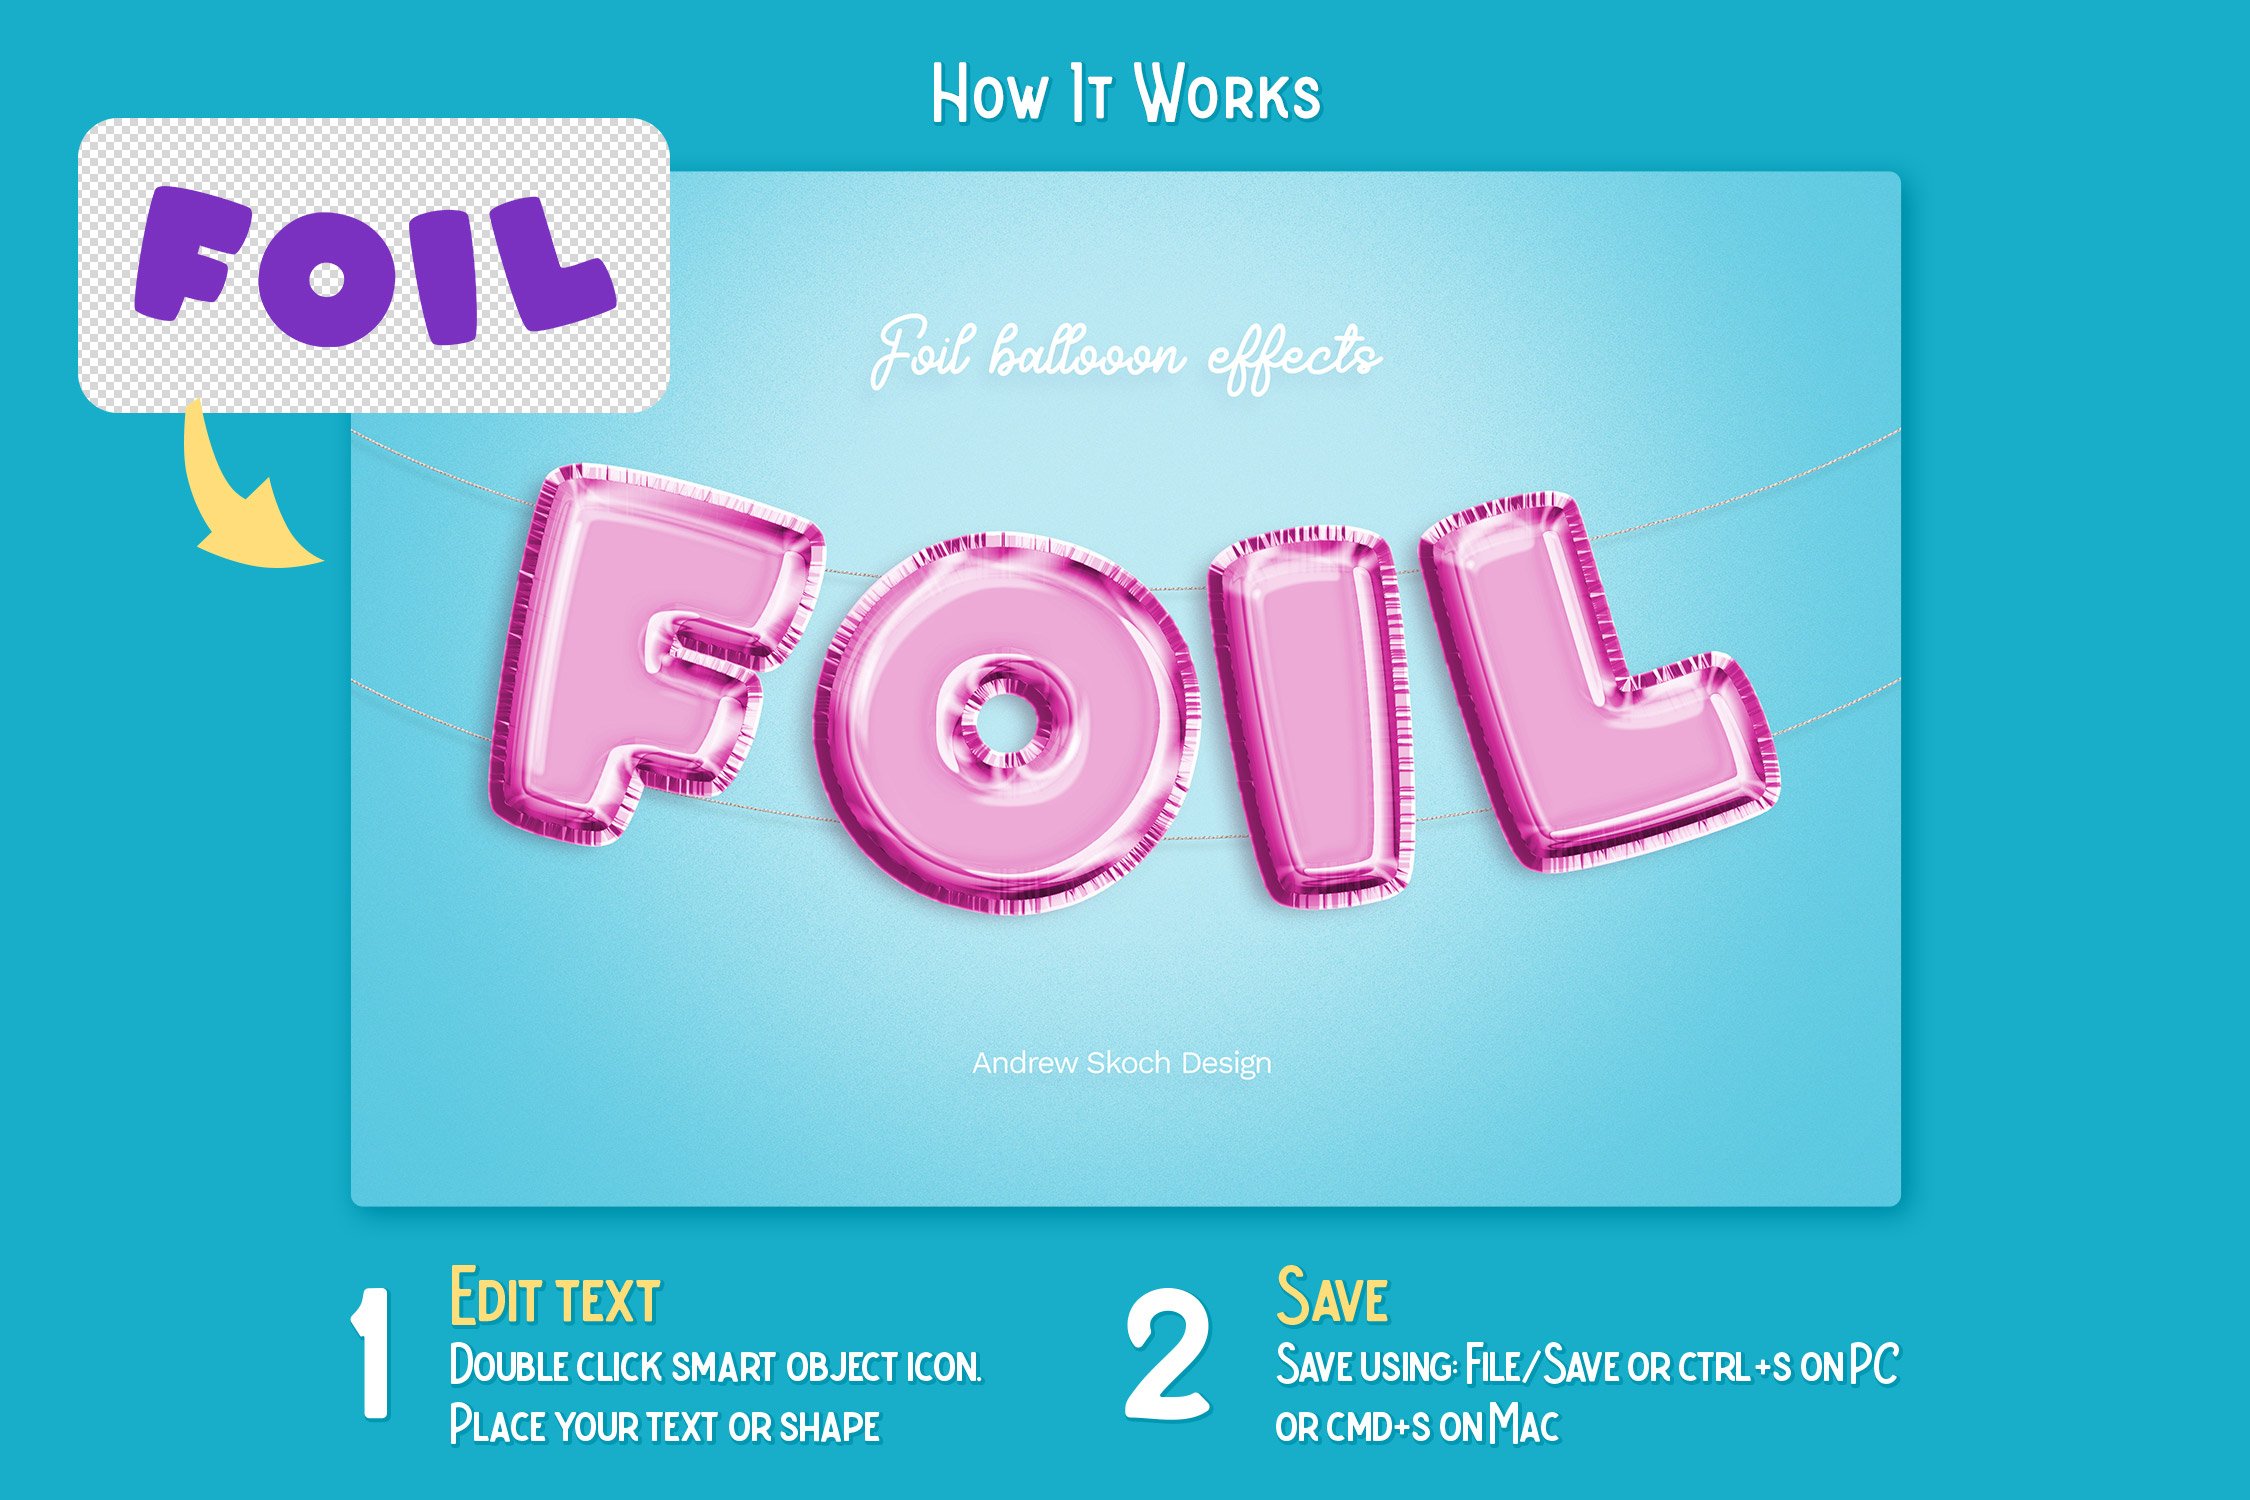 Foil Balloon Text Effectspreview image.